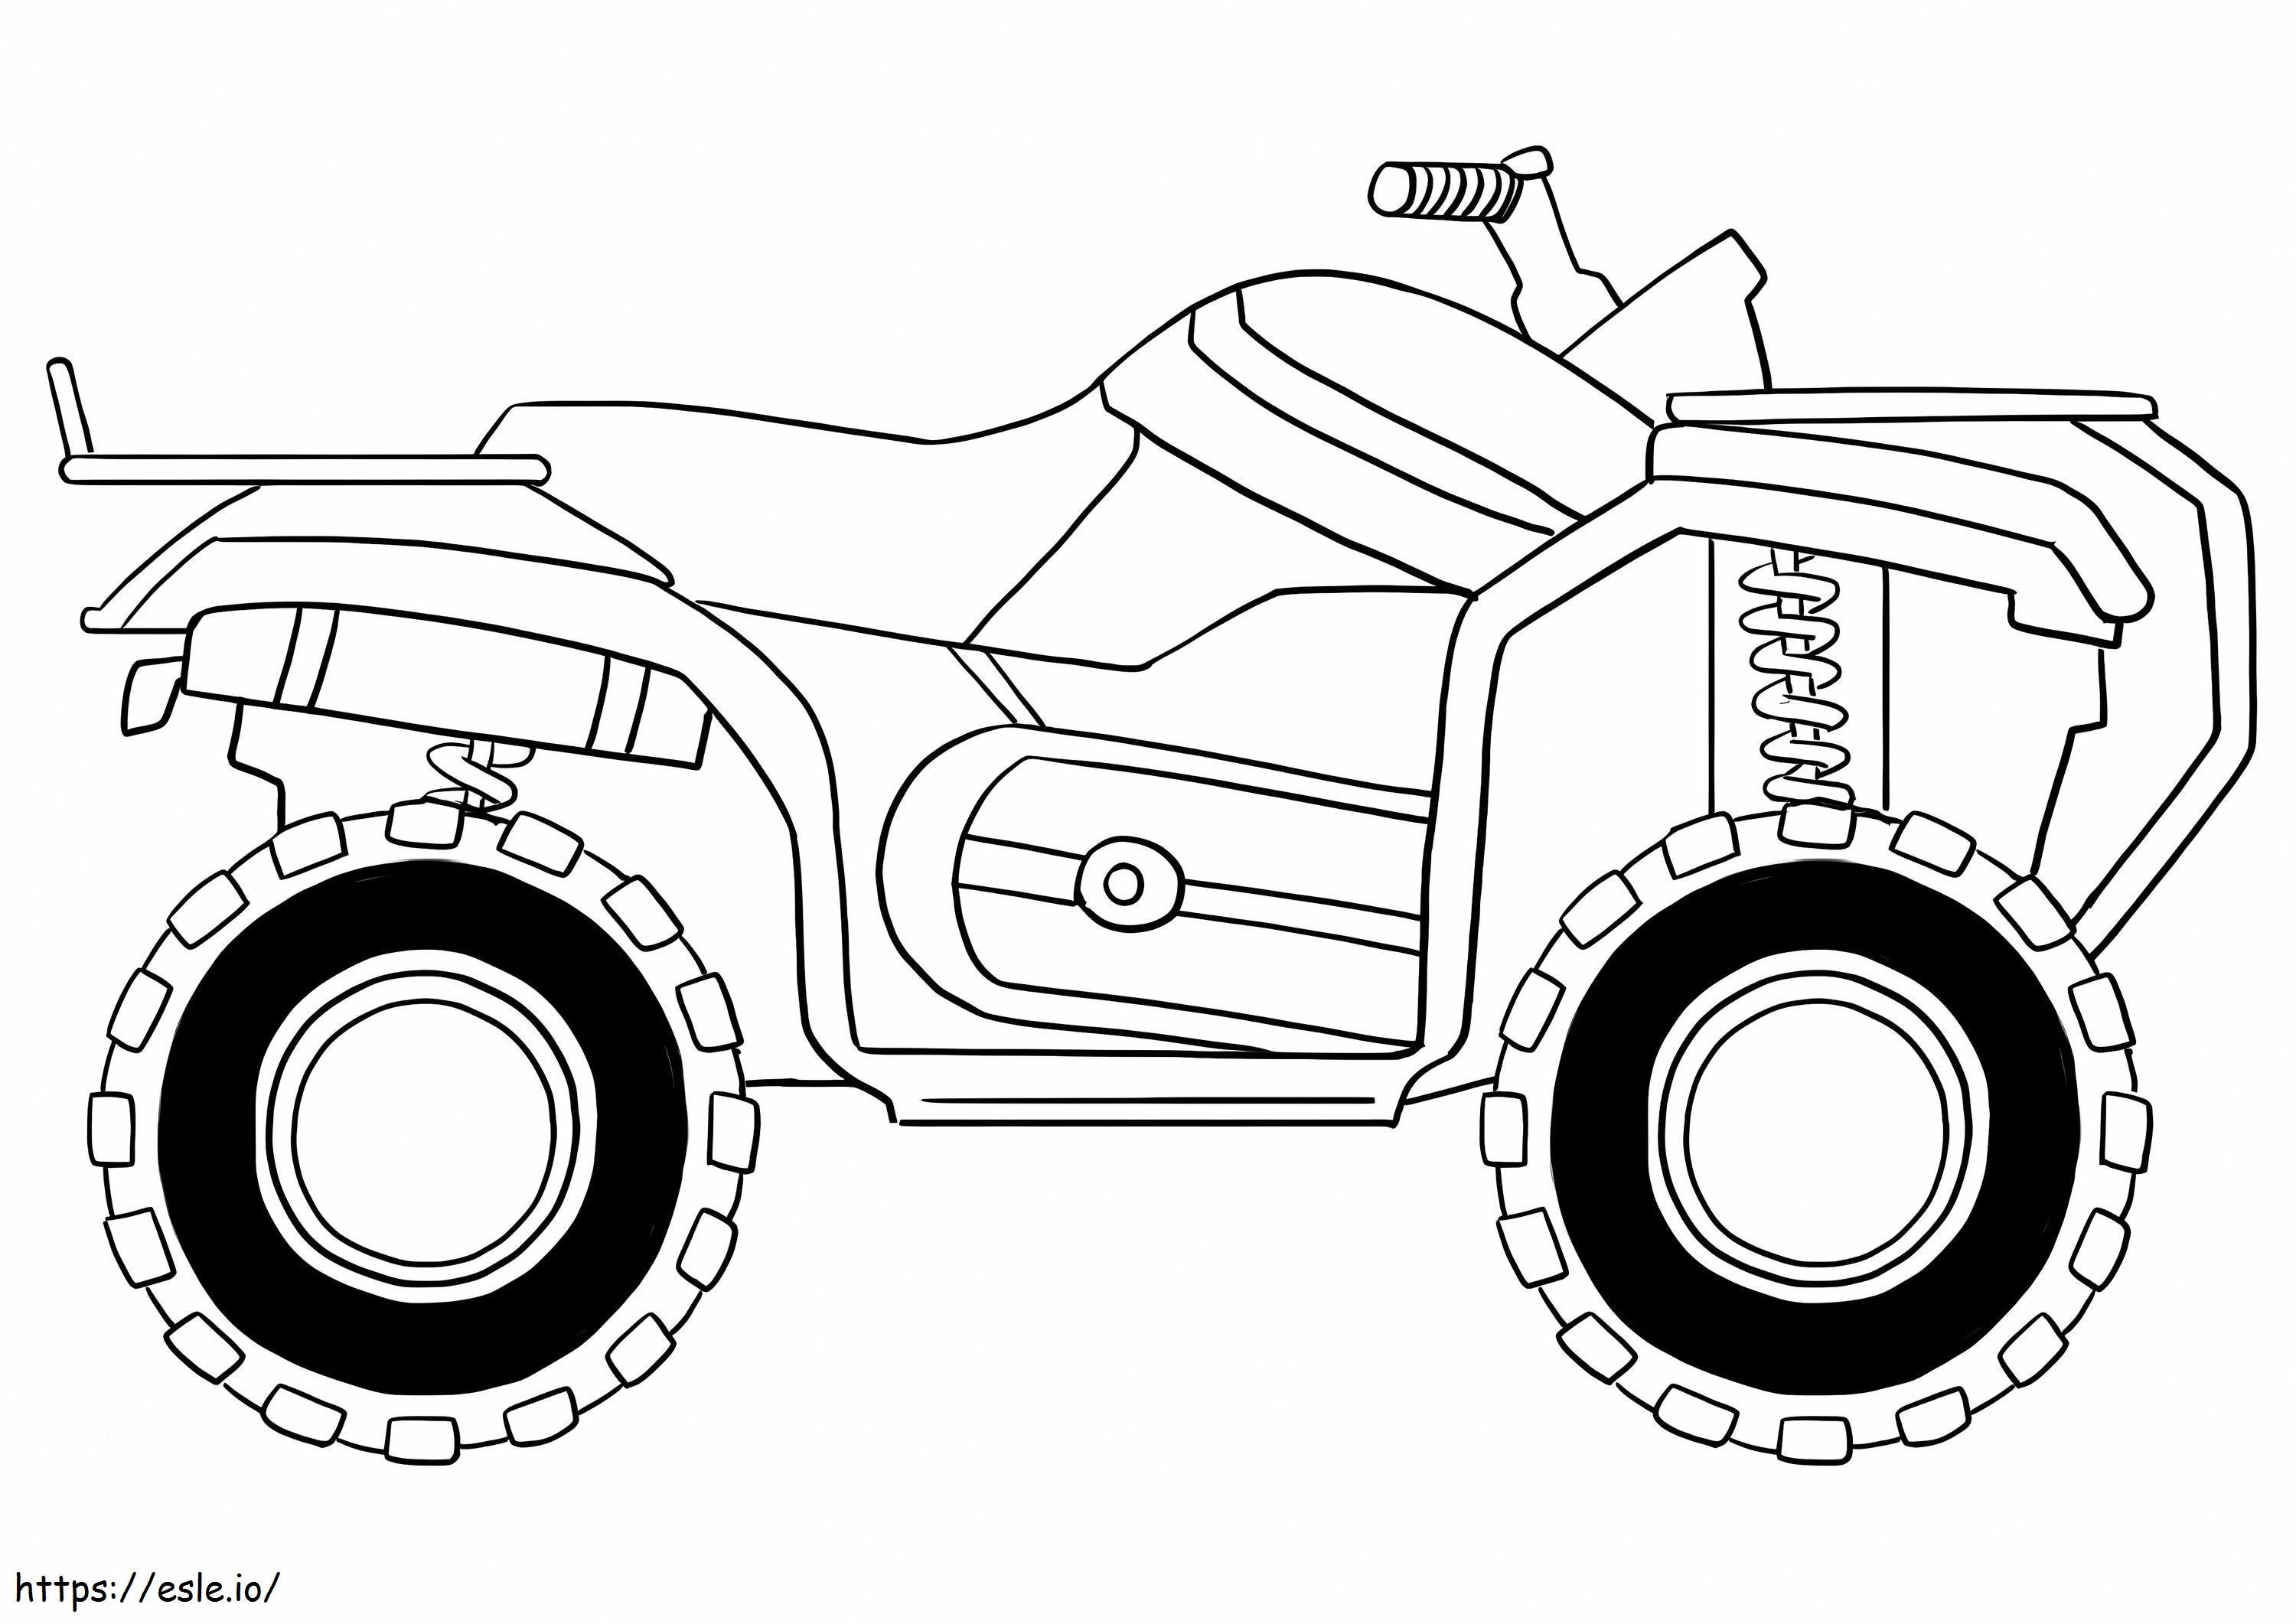 ATV Quad Bike coloring page